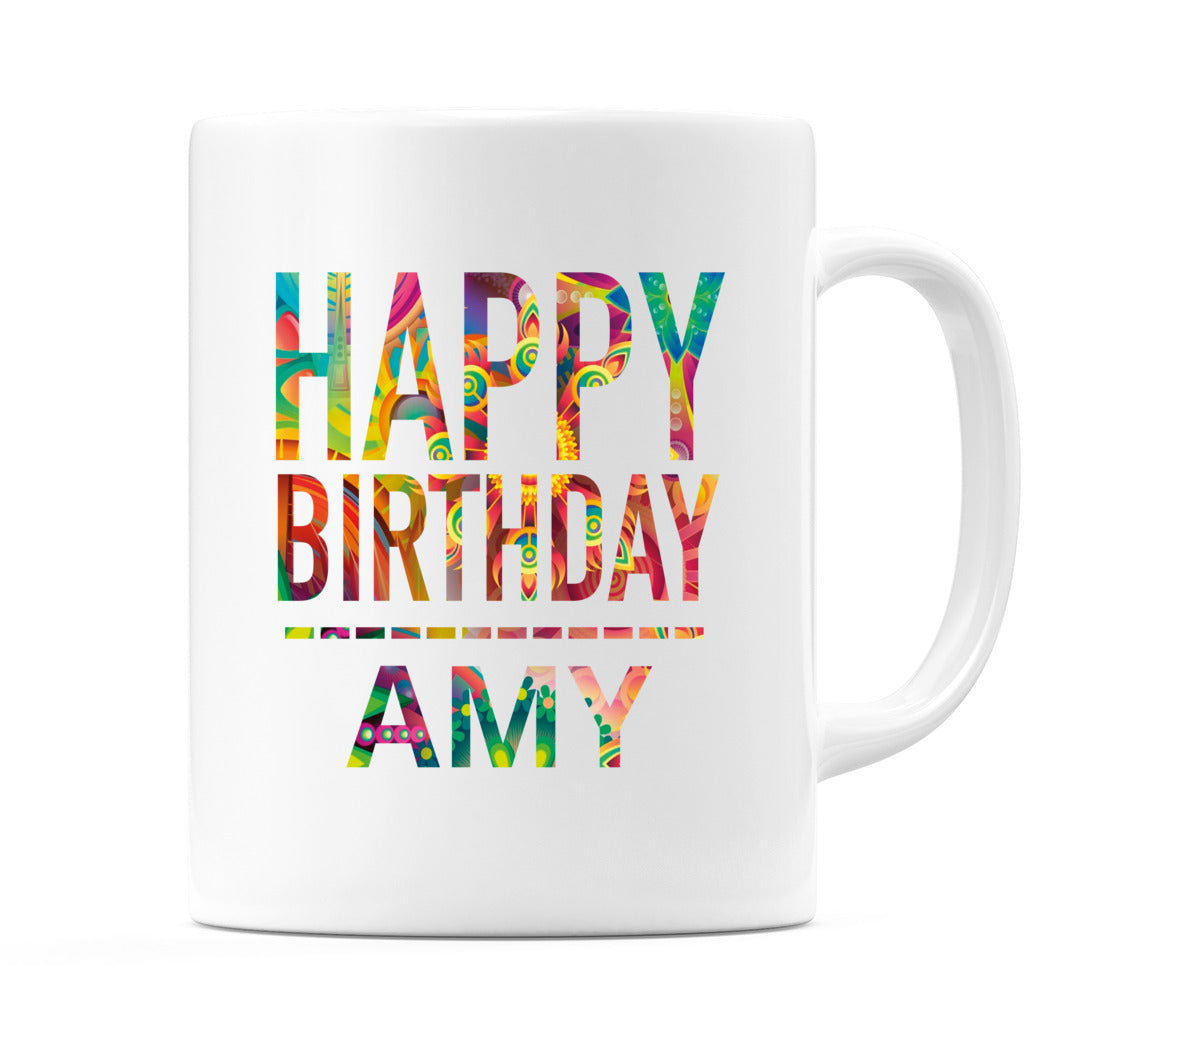 Happy Birthday Amy (Tie Dye Effect) Mug Cup by WeDoMugs